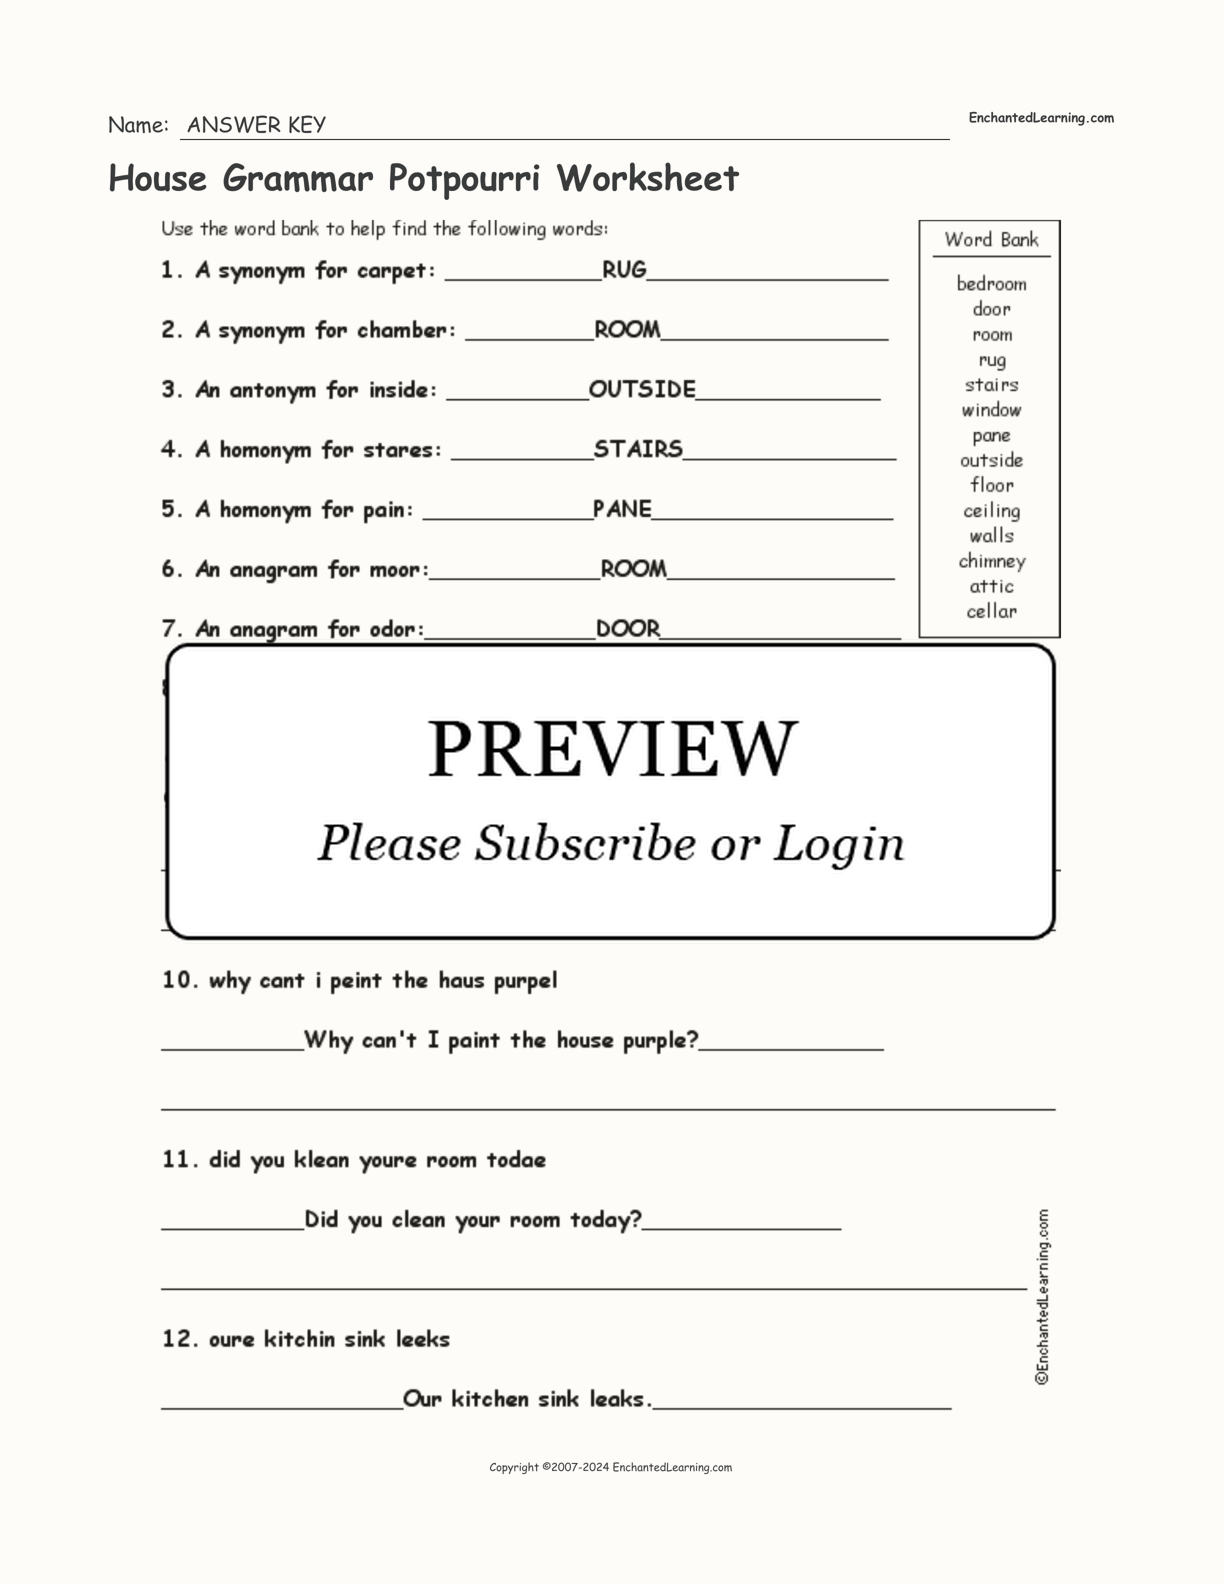 House Grammar Potpourri Worksheet interactive worksheet page 2